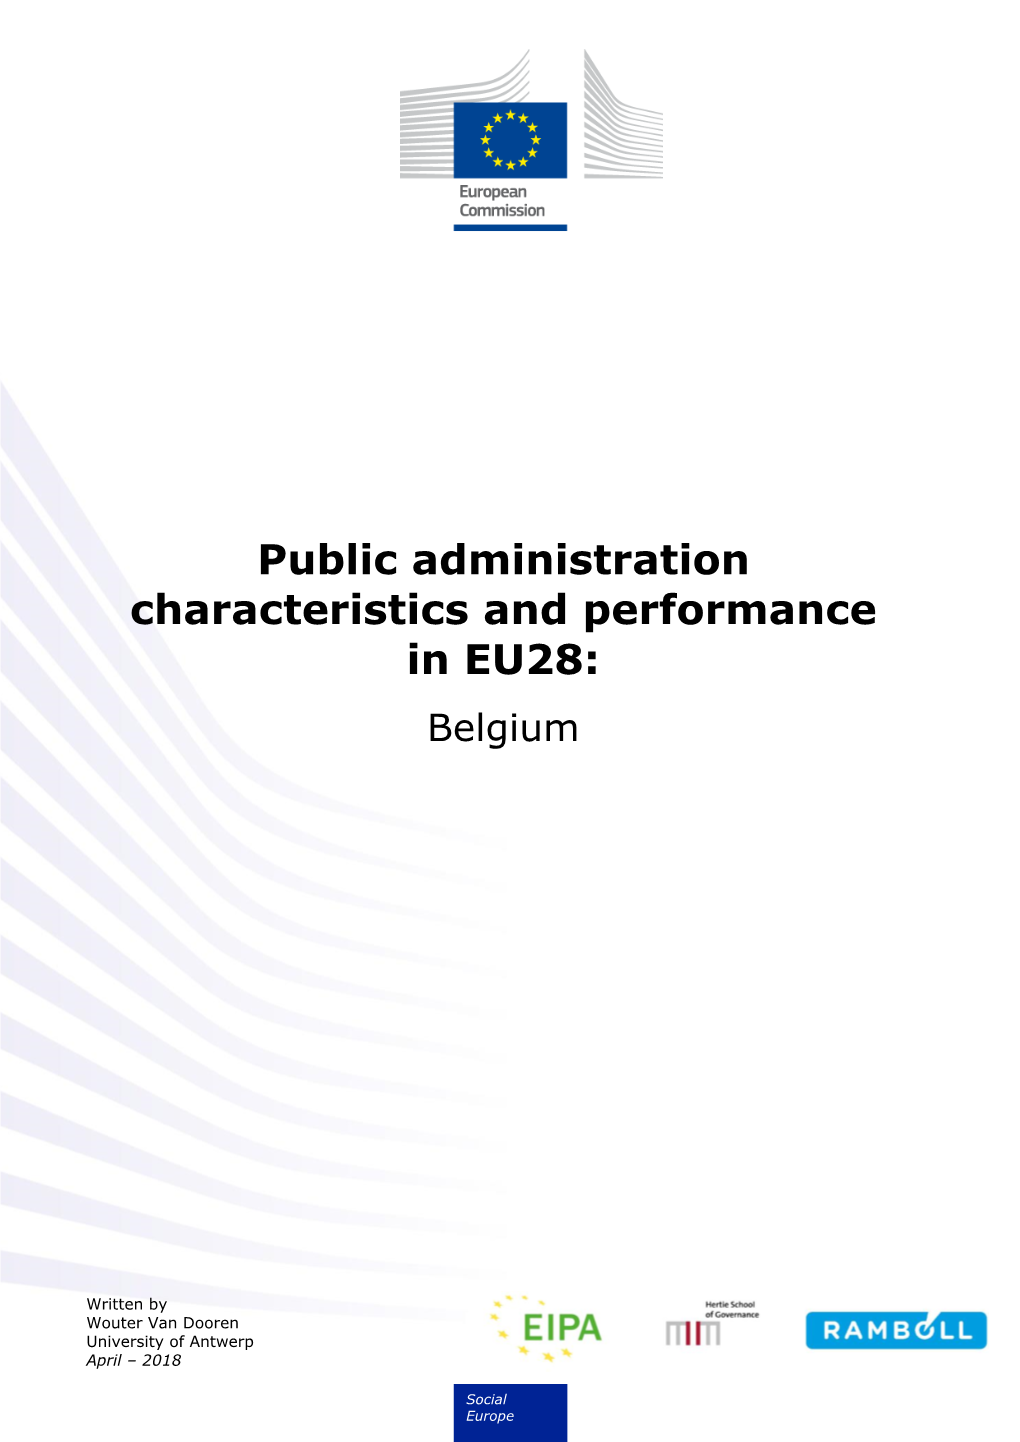 Public Administration Characteristics and Performance in EU28: Belgium